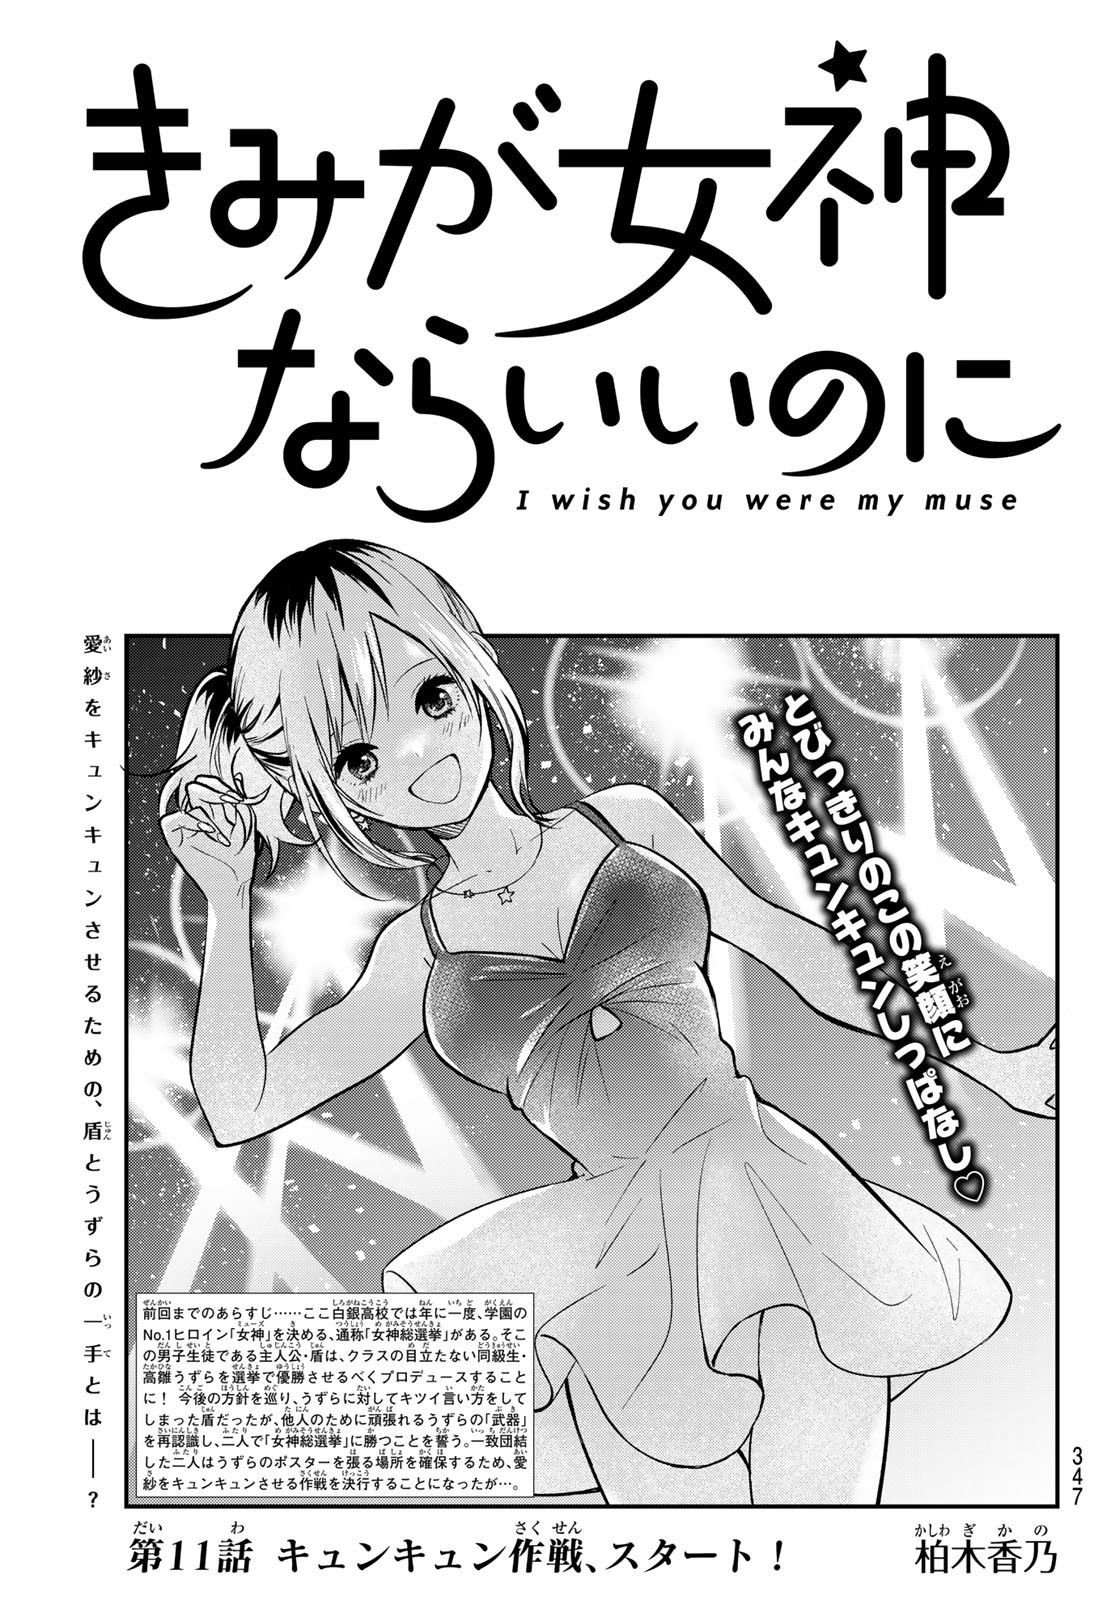 Kimi ga Megami Nara Ii no ni (I Wish You Were My Muse) - Chapter 011 - Page 1